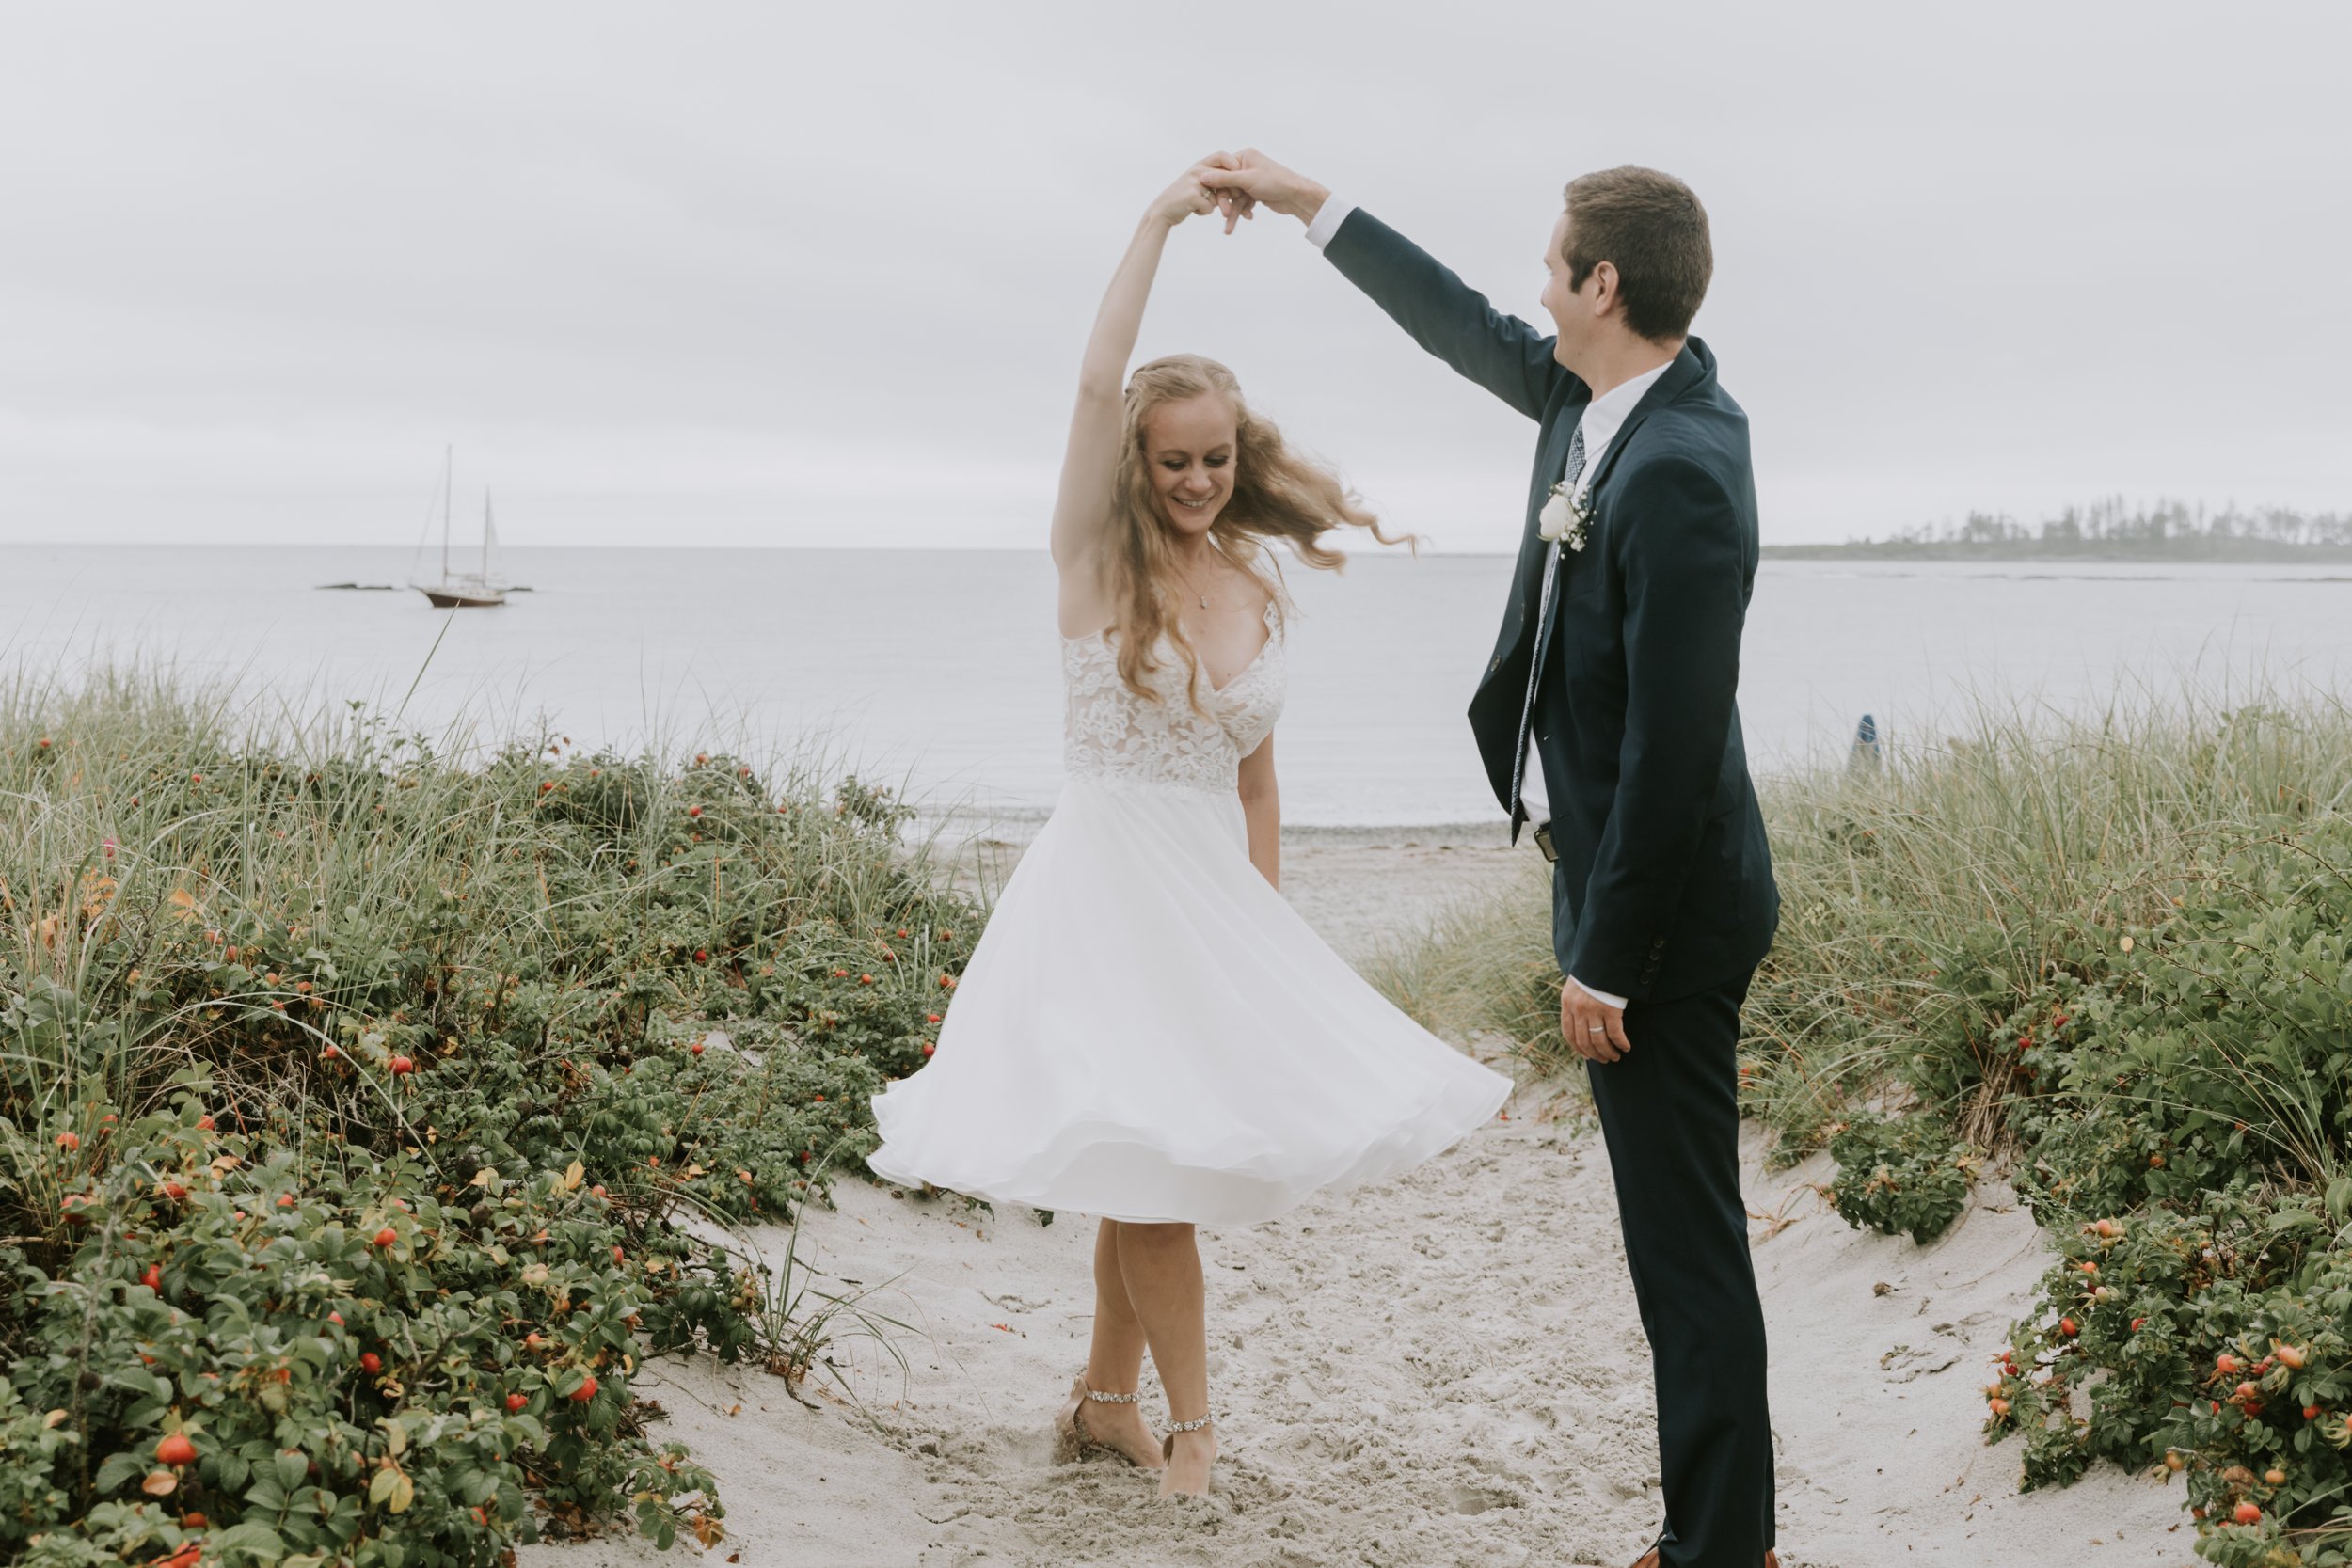 Portland, Maine Wedding Photographer | Inn By The Sea Cape Elizabeth, Maine